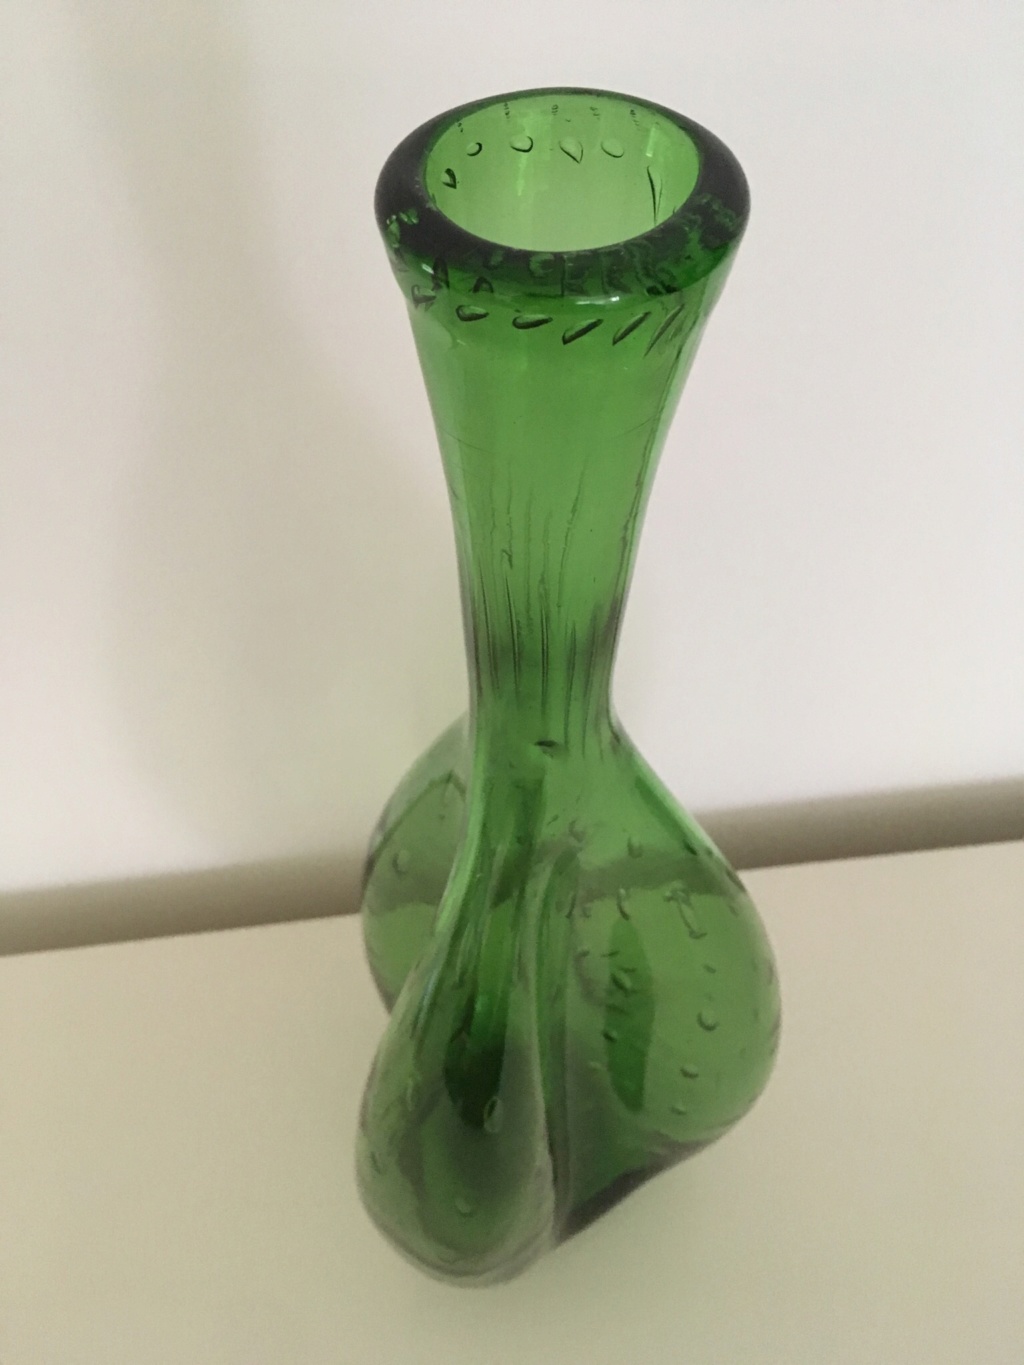 Green glass decorative bottle Image11